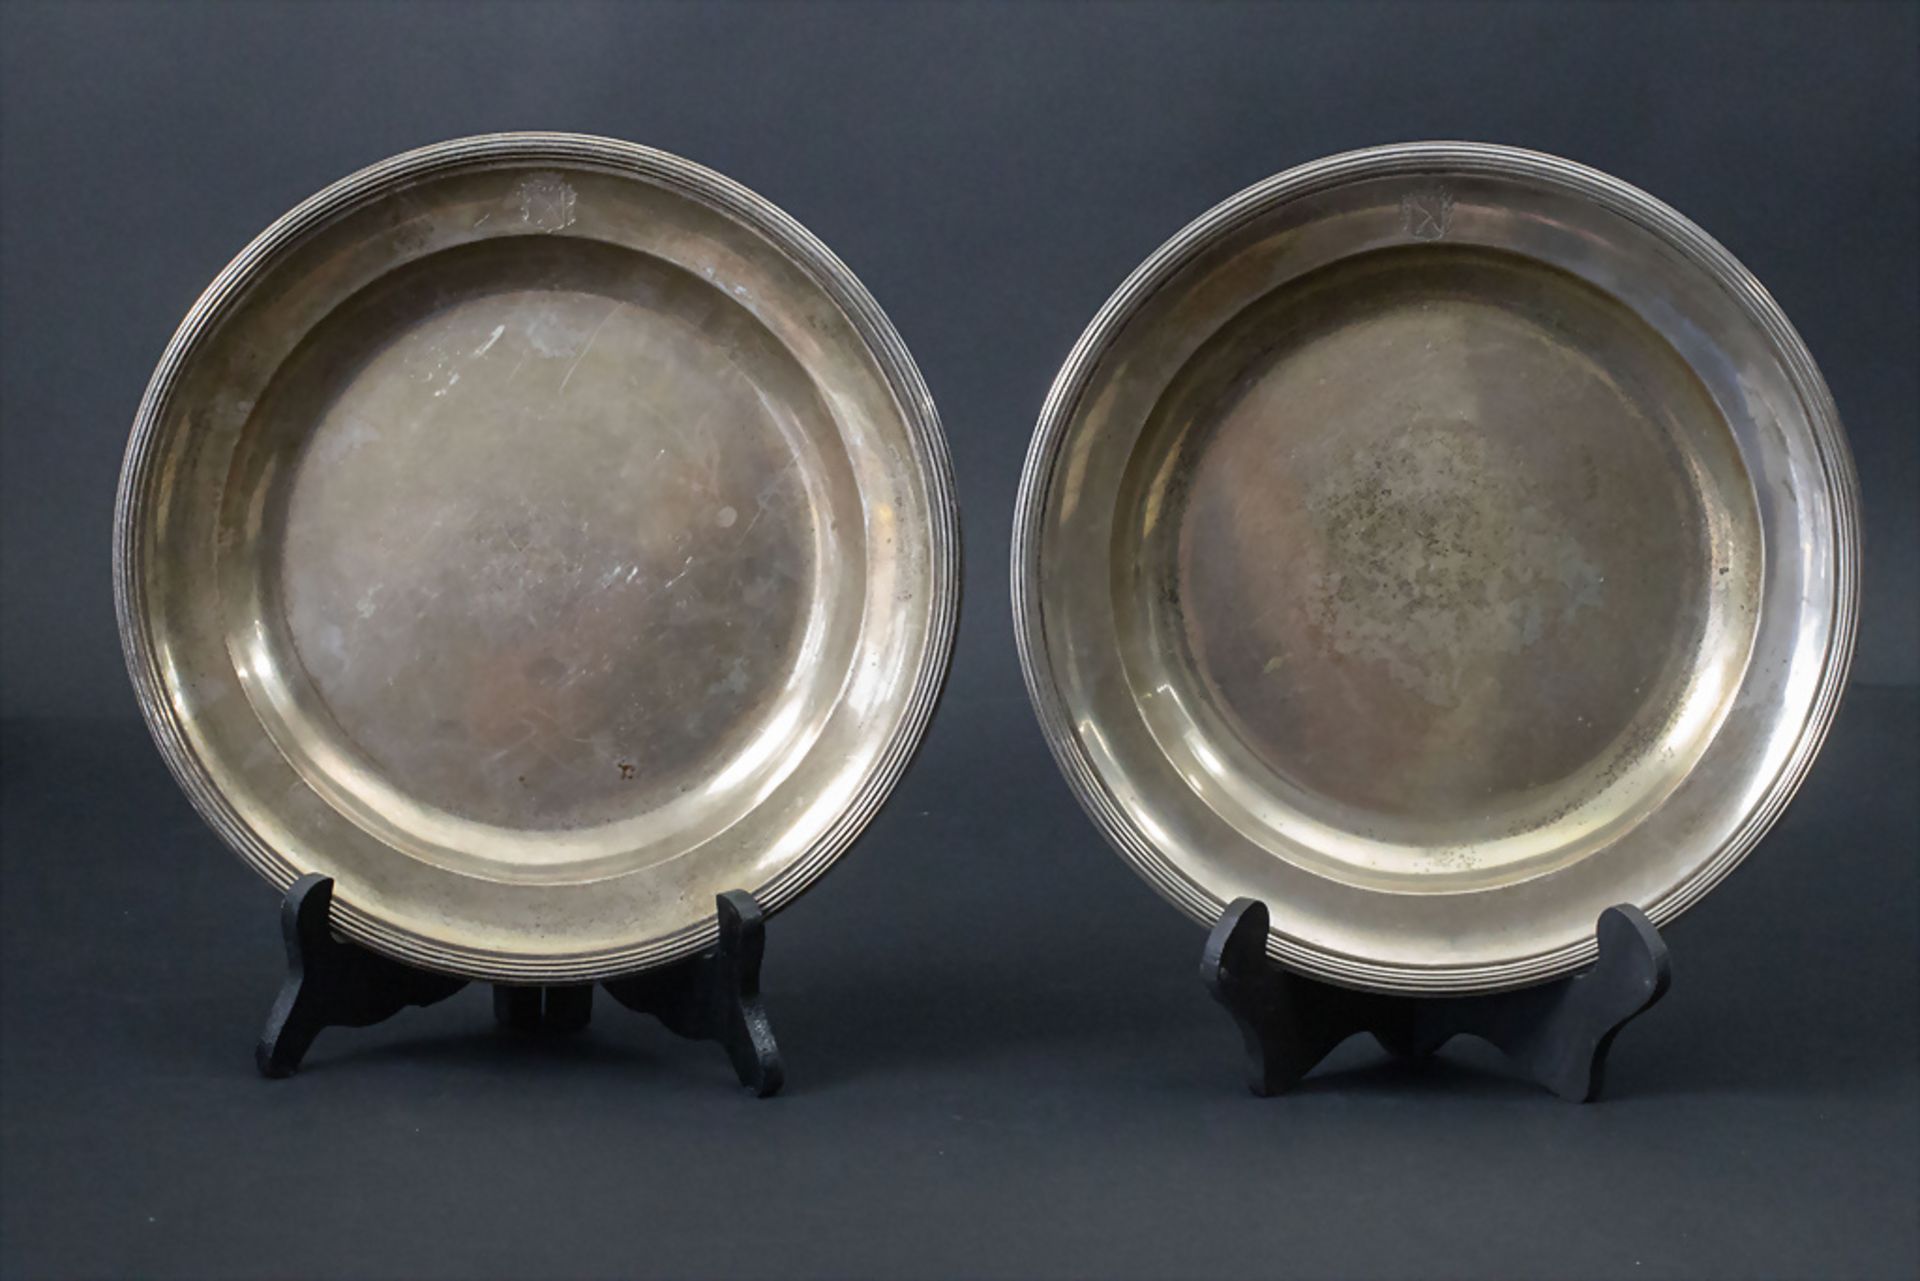 2 Silberteller / 2 silver plates, A. Würth, Wien, 1816